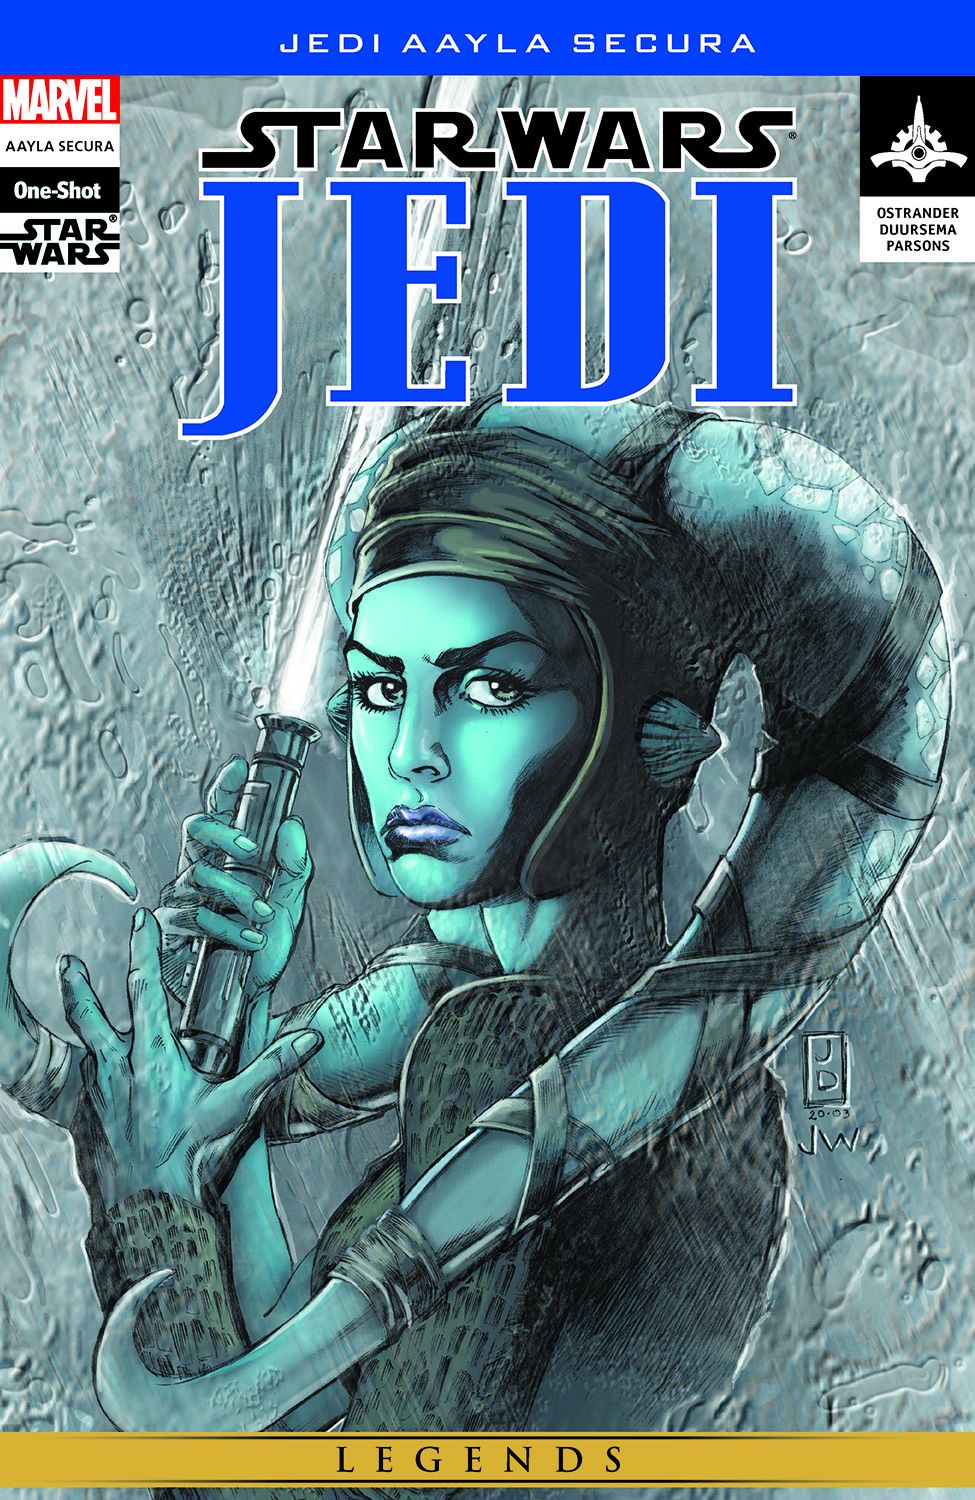 cover of Star Wars Jedi Aayla Secura